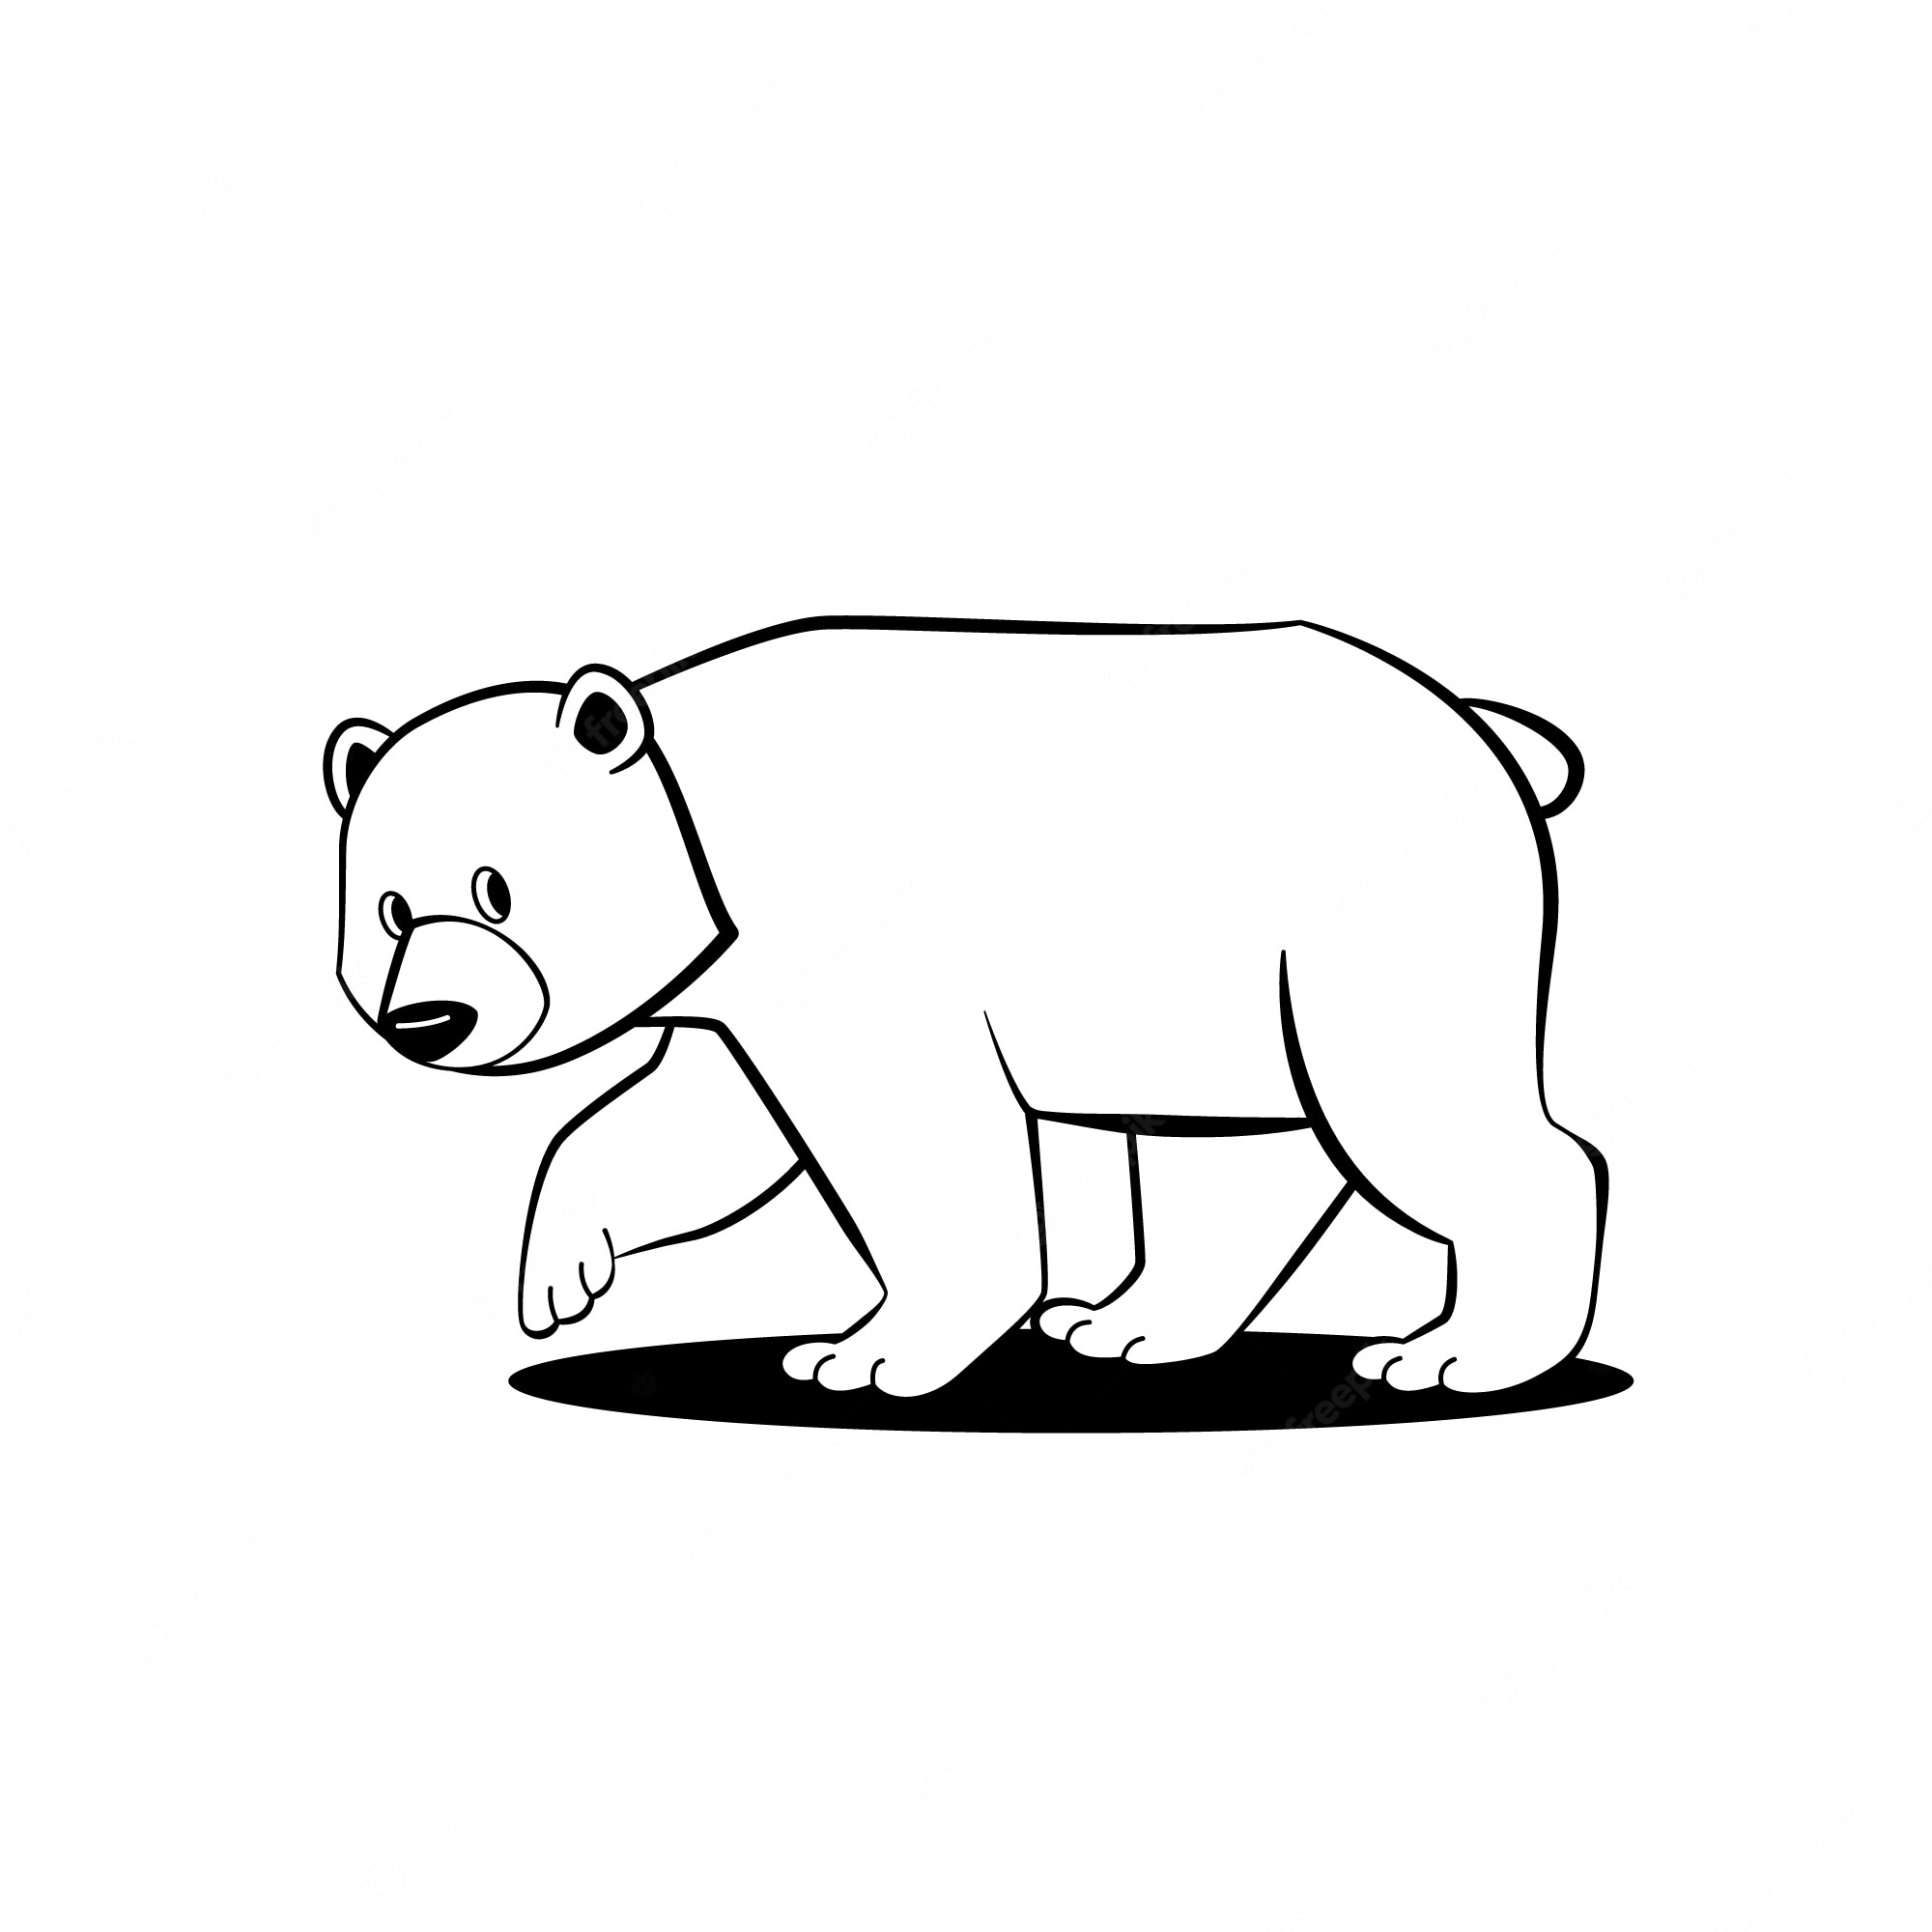 Bear outline Image. Free Vectors, & PSD